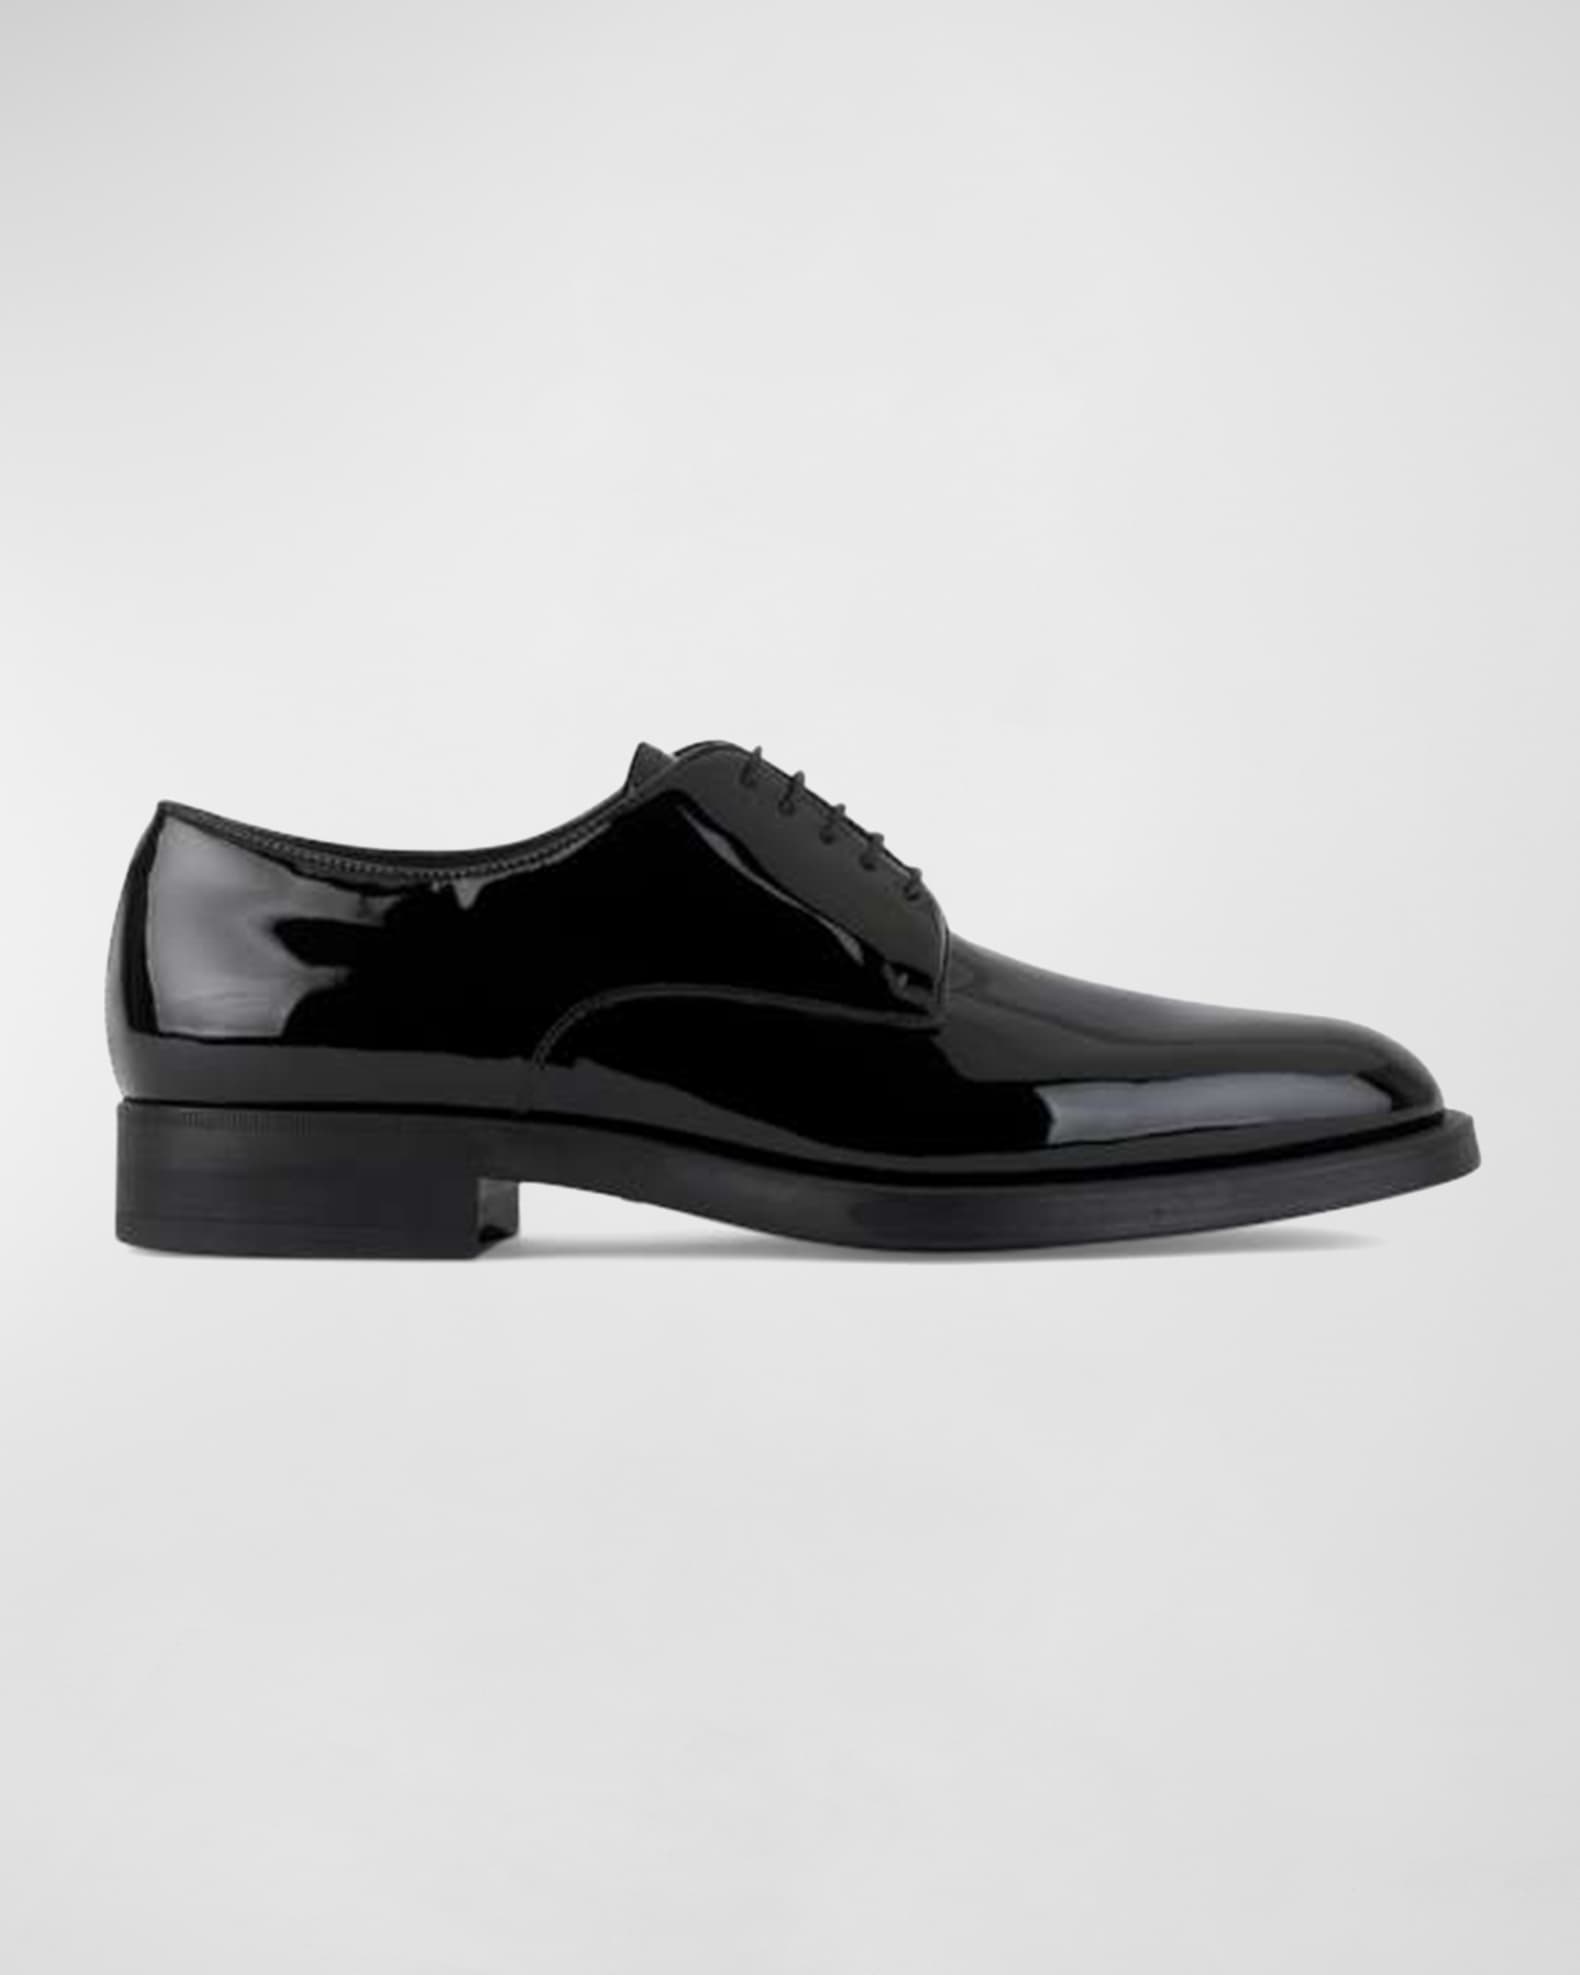 Giorgio Armani Men's Patent Leather Derby Shoes | Neiman Marcus